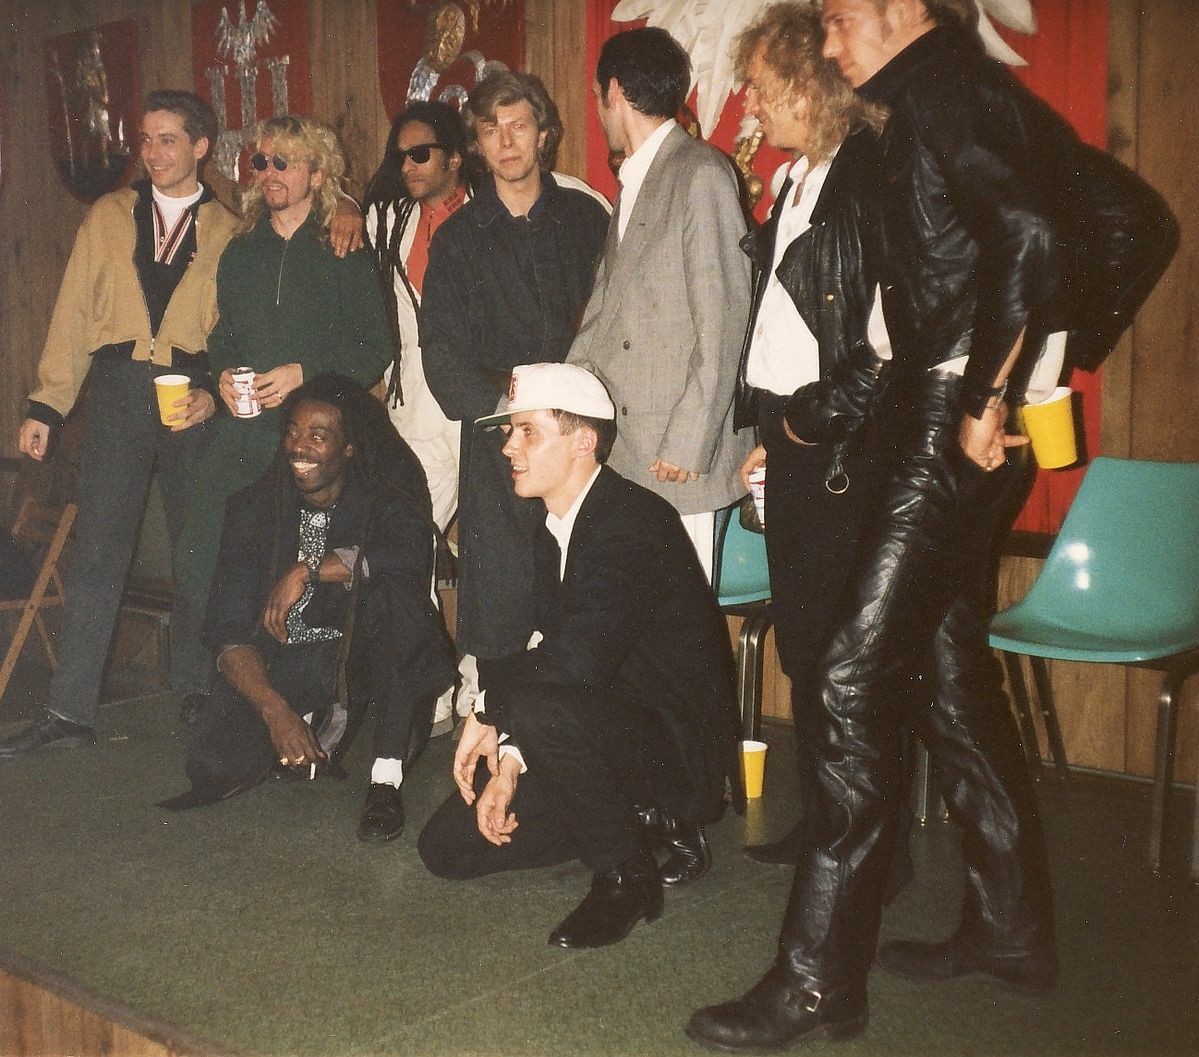 (l/r): Greg Roberts (BigAudioDynamite), Dave Stewart (Eurythmics), Don Letts (B.A.D), David Bowie, Jimmy Cliff cover by Mick Jones (B.A.D/Clash), Peter Frampton, Dan Donovan (B.A.D, bowed), Paul Simenon (Clash), At 'Irvin Plaza' concert of B.A.D backstage, NYC, April 1987